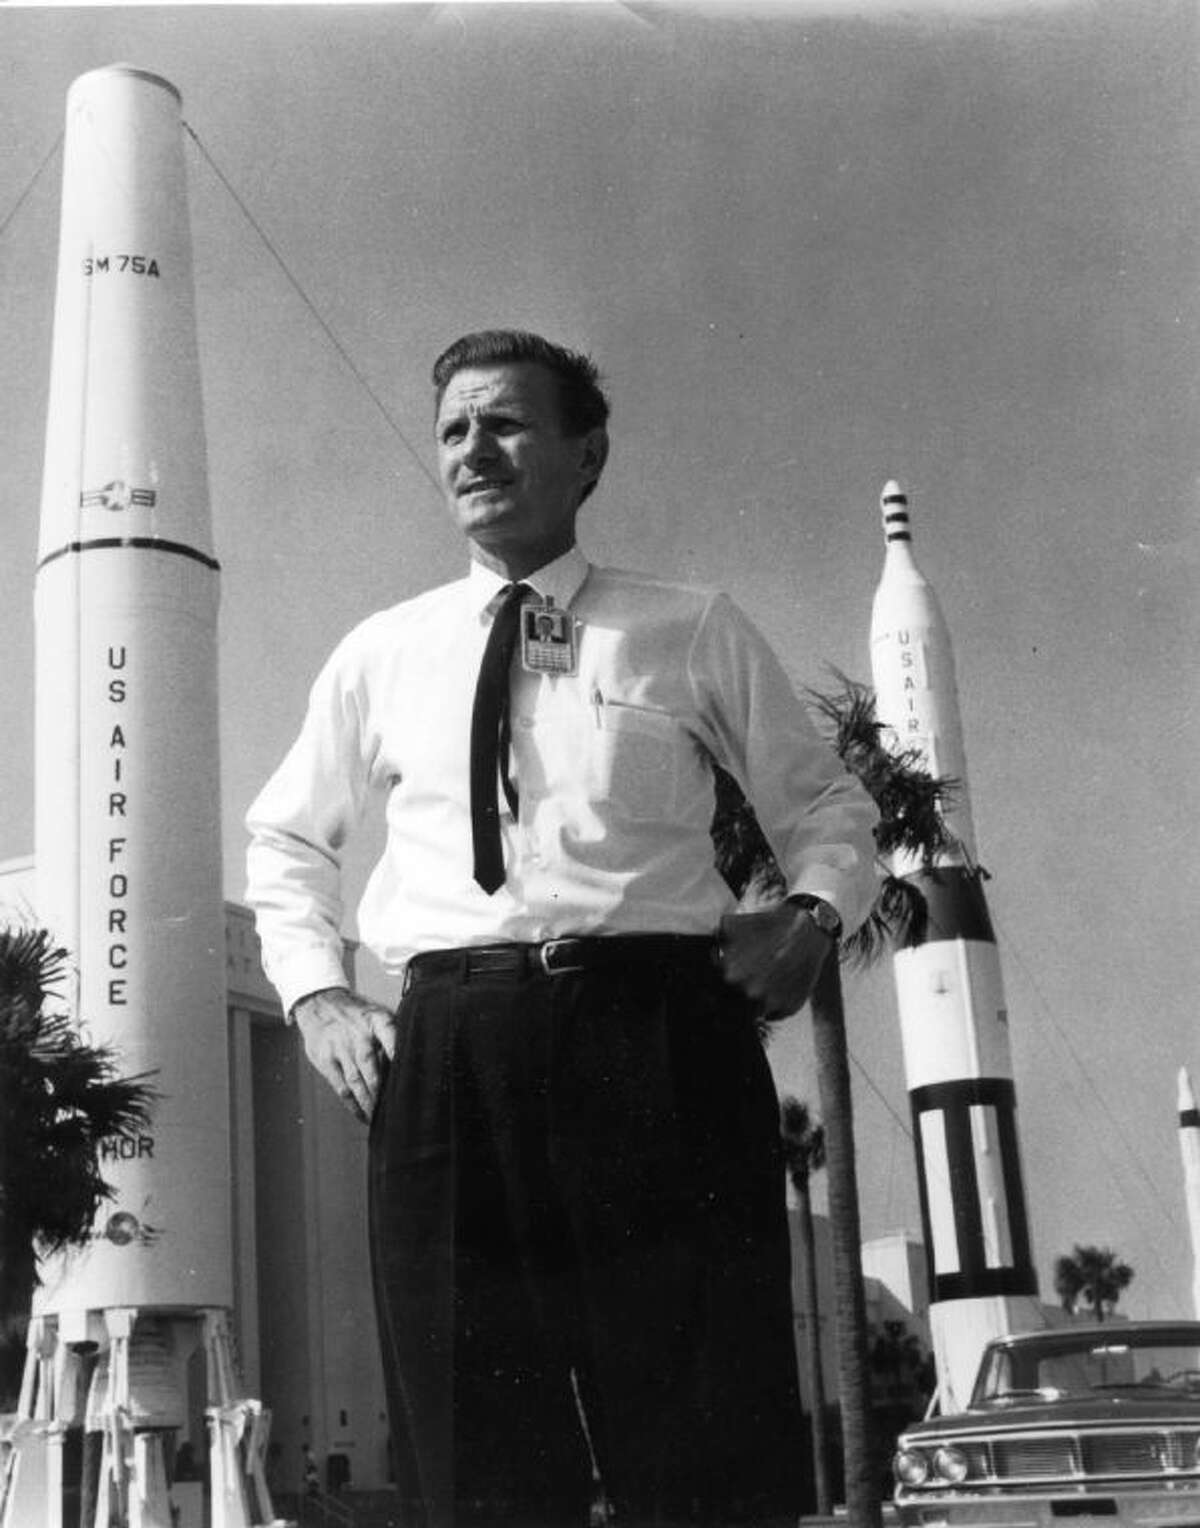 John Stout circa 1964 at Cape Canaveral During Gemini Program.